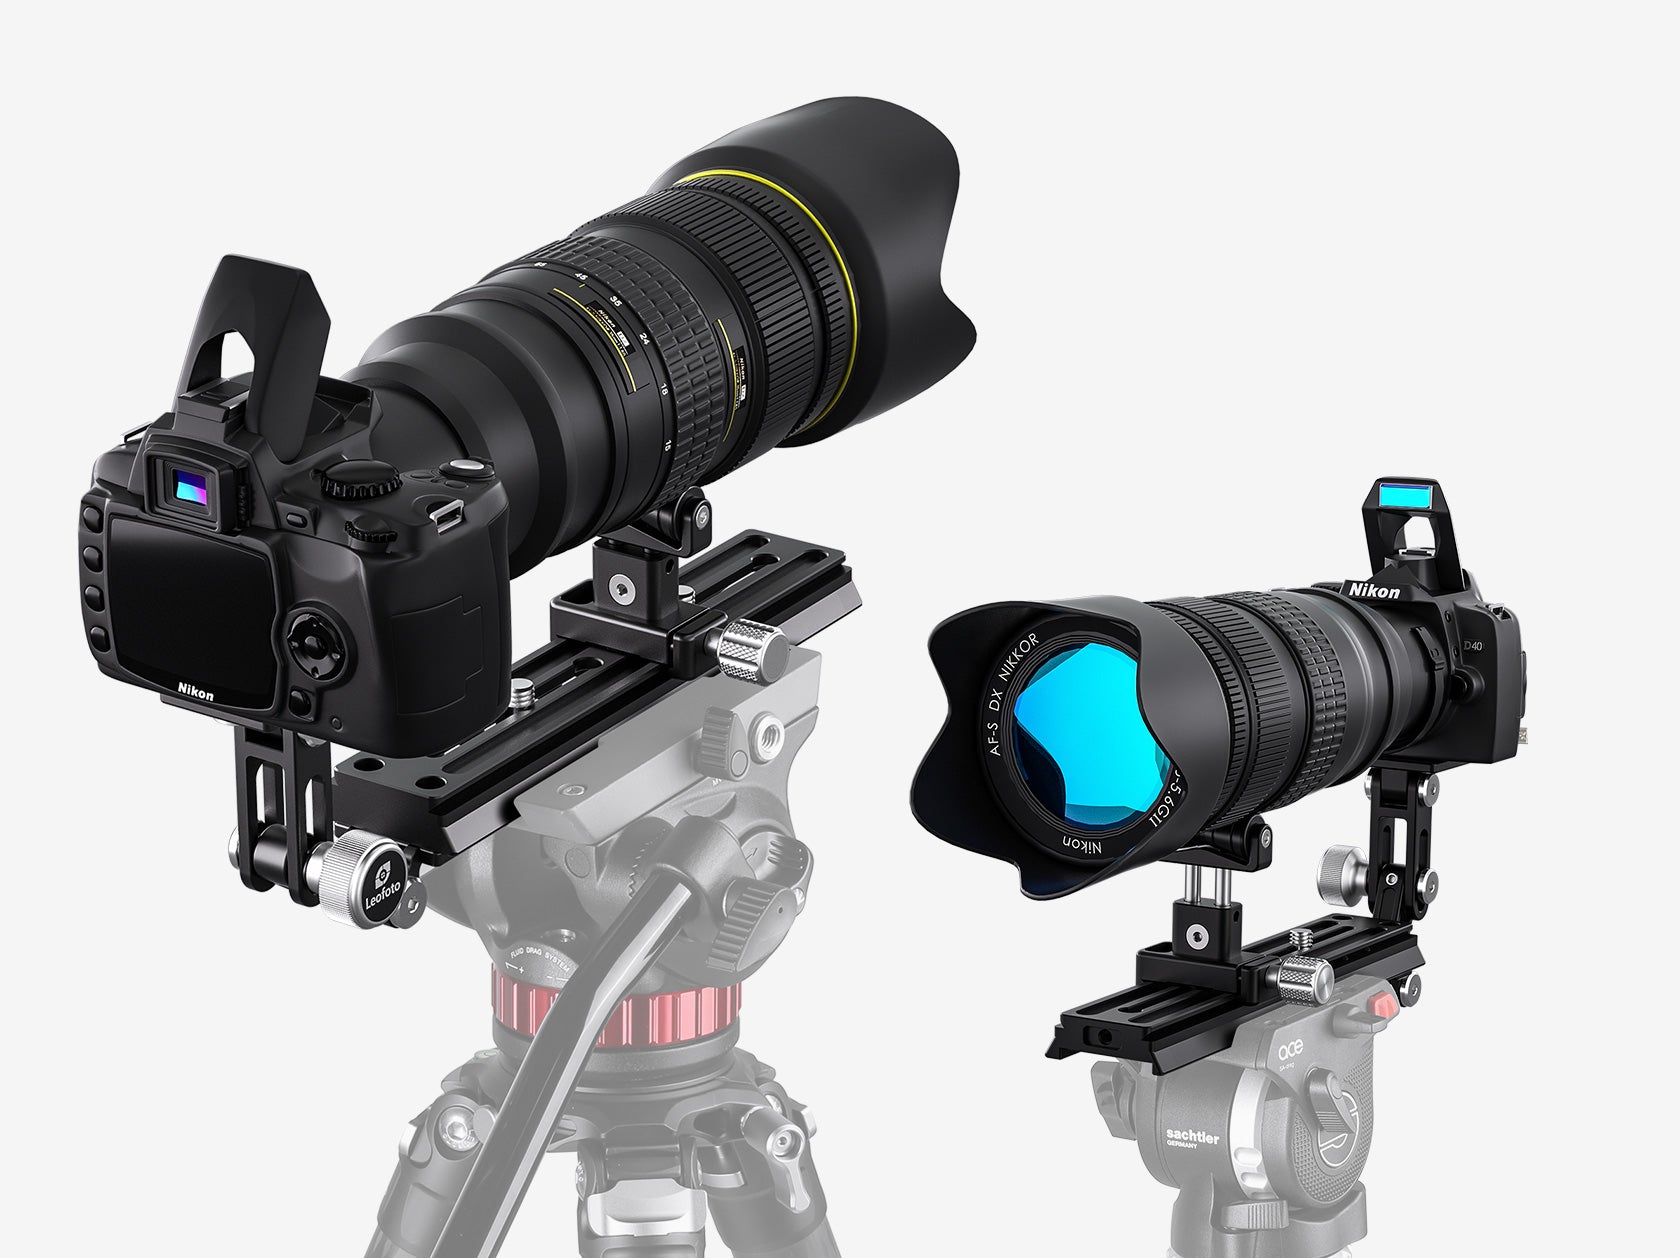 Leofoto VR-220Kit Updated 220mm Dual Pivot Long Lens Support for Manfrotto/ Sachtler Tripod Head